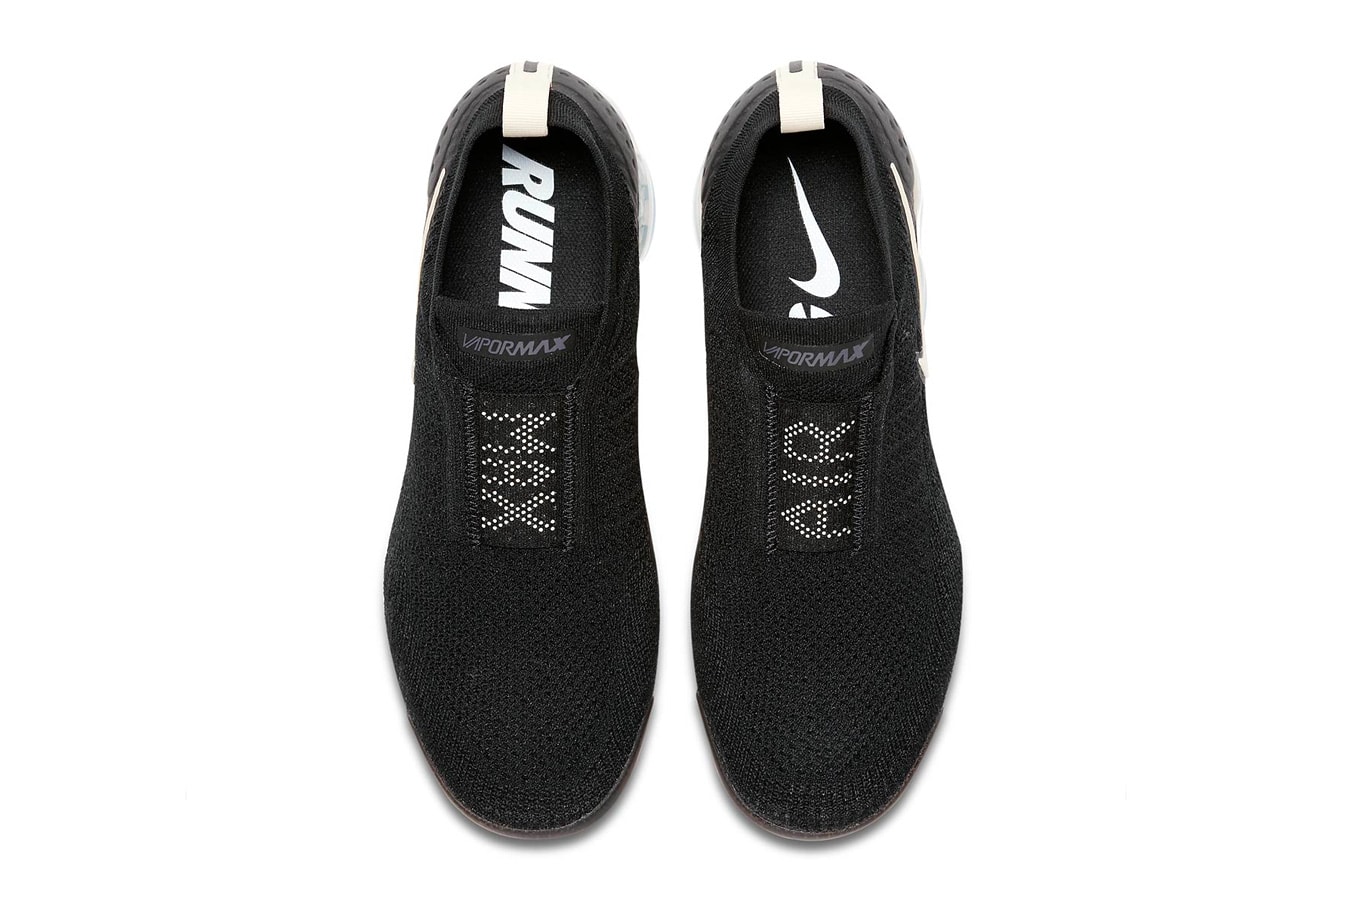 Nike Air VaporMax Moc 2 "Black/Light Cream" Release Date